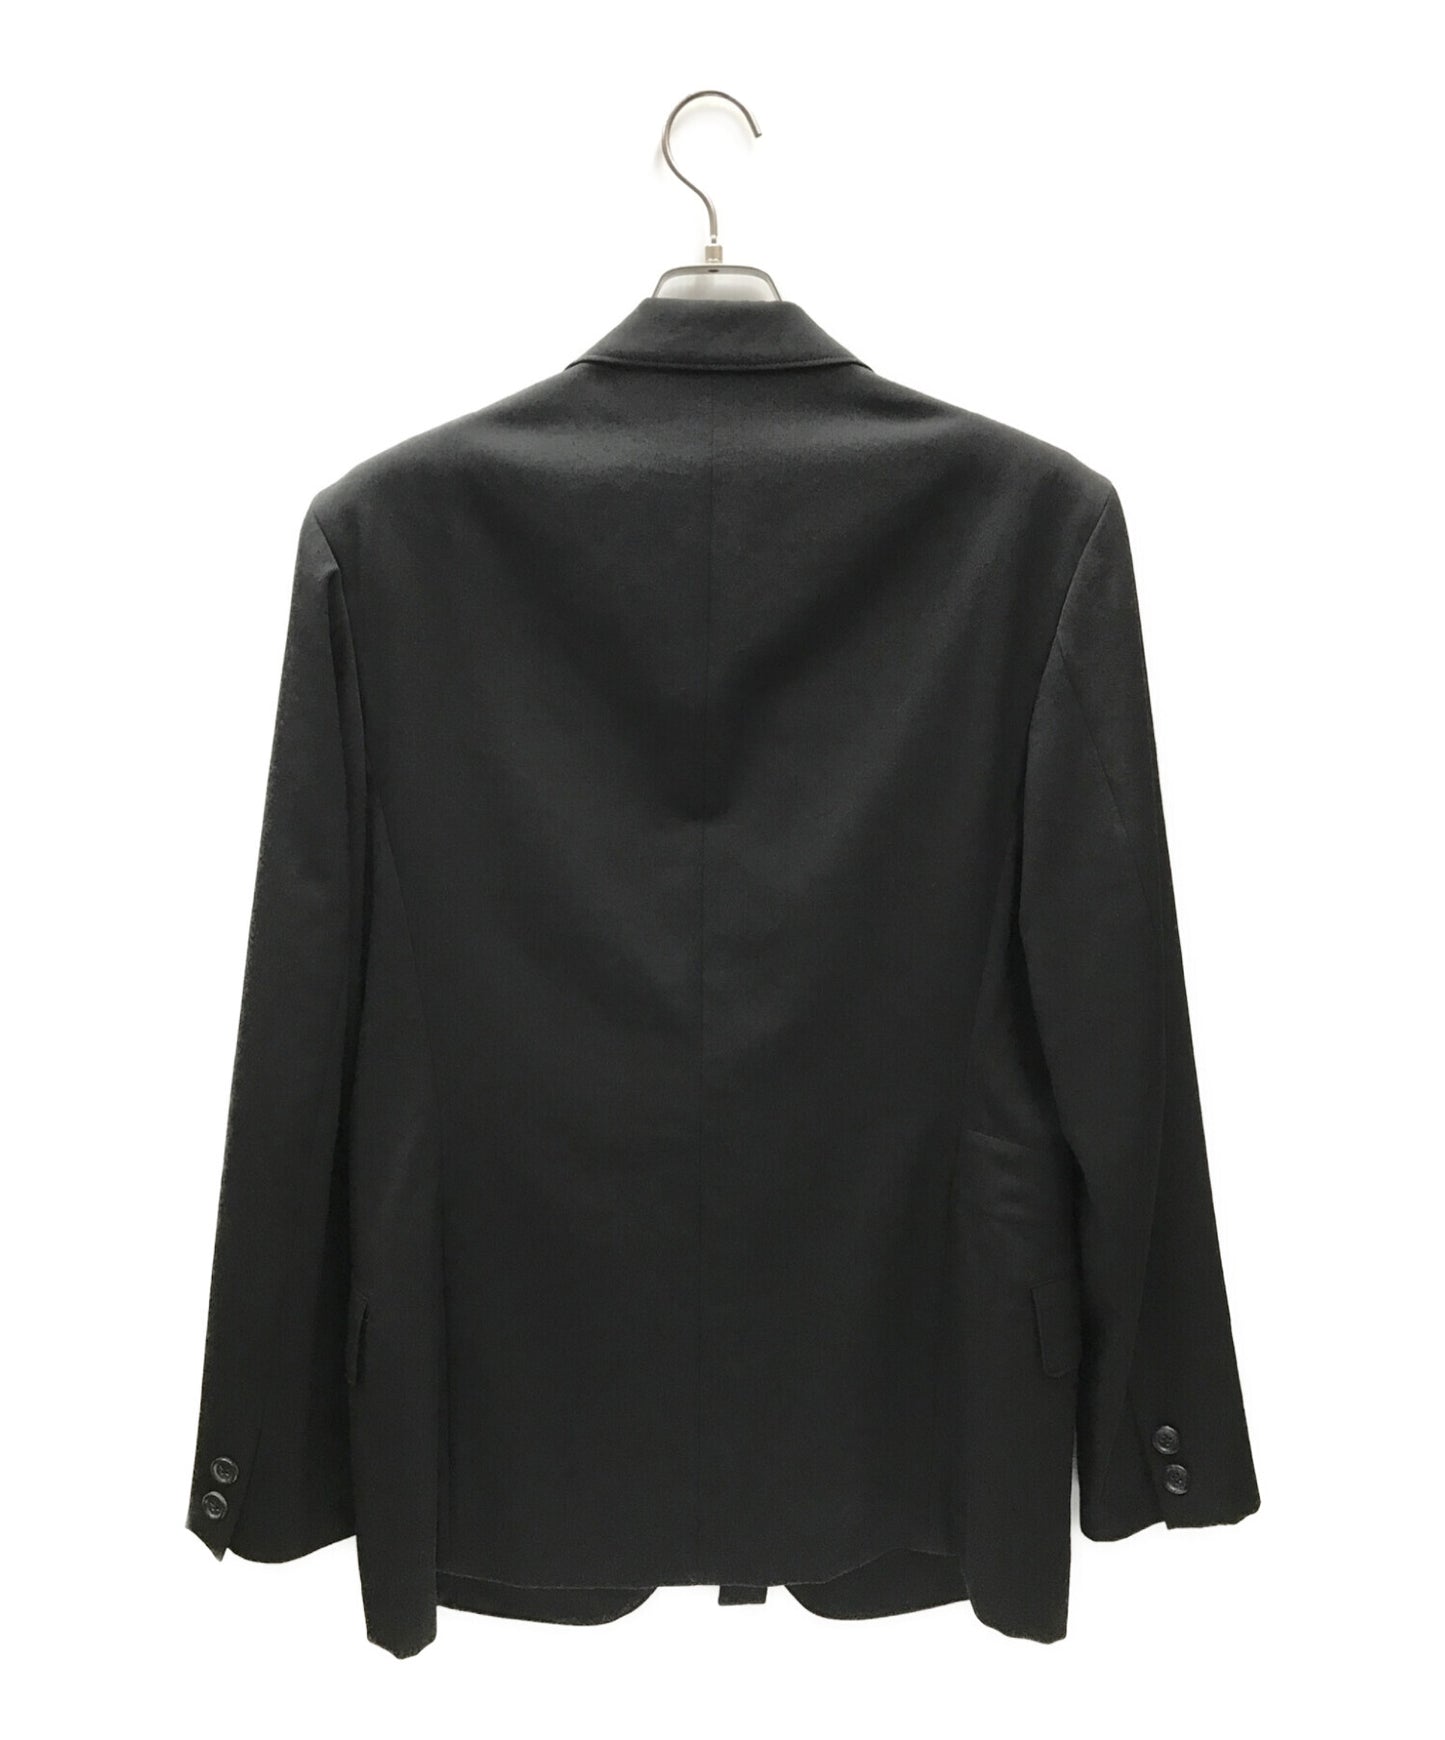 yohji yamamoto pour homme 17ss Wool Gabard 복제 재킷/맞춤형 재킷 HD-J56-107